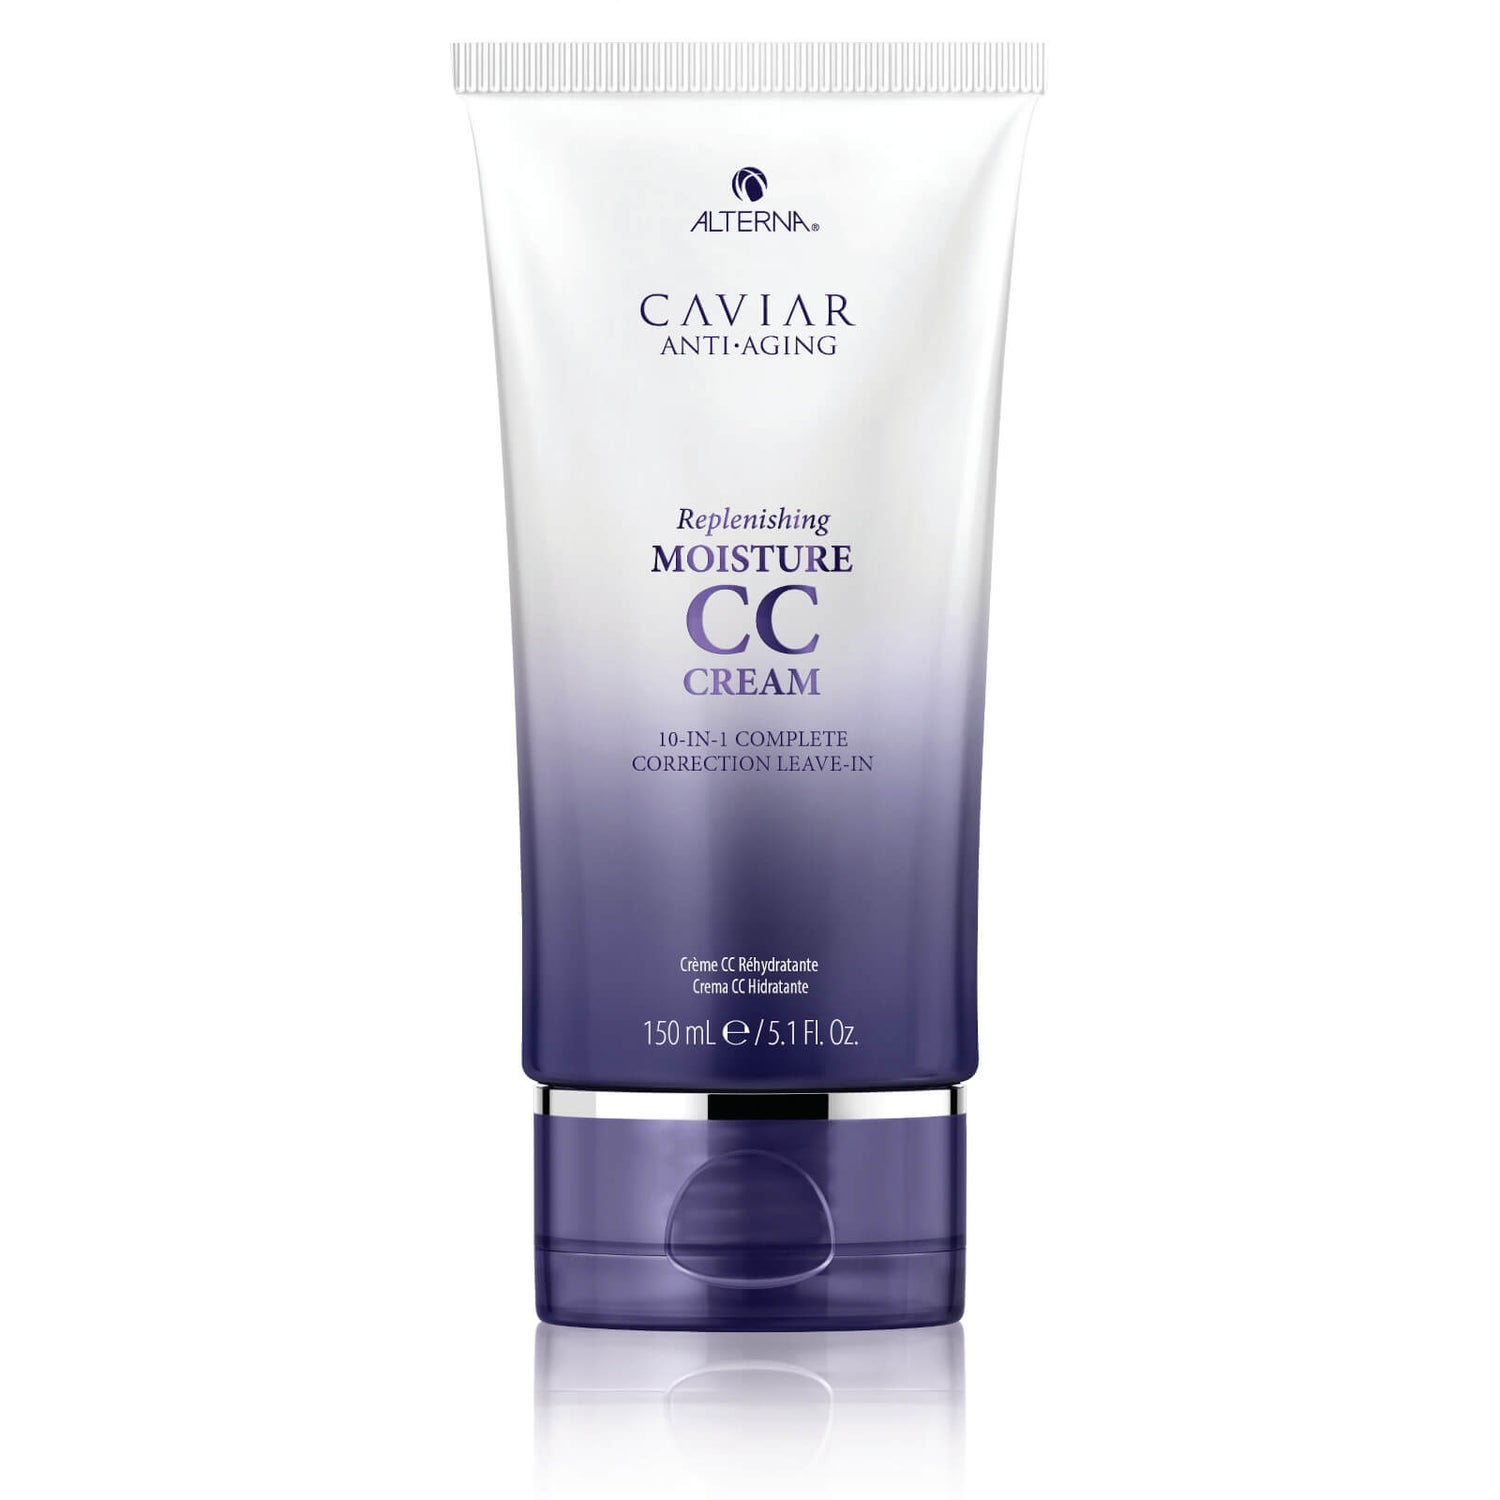 Alterna Caviar Replenishing Moisture 10-in-1 Leave-In CC Cream 150ml